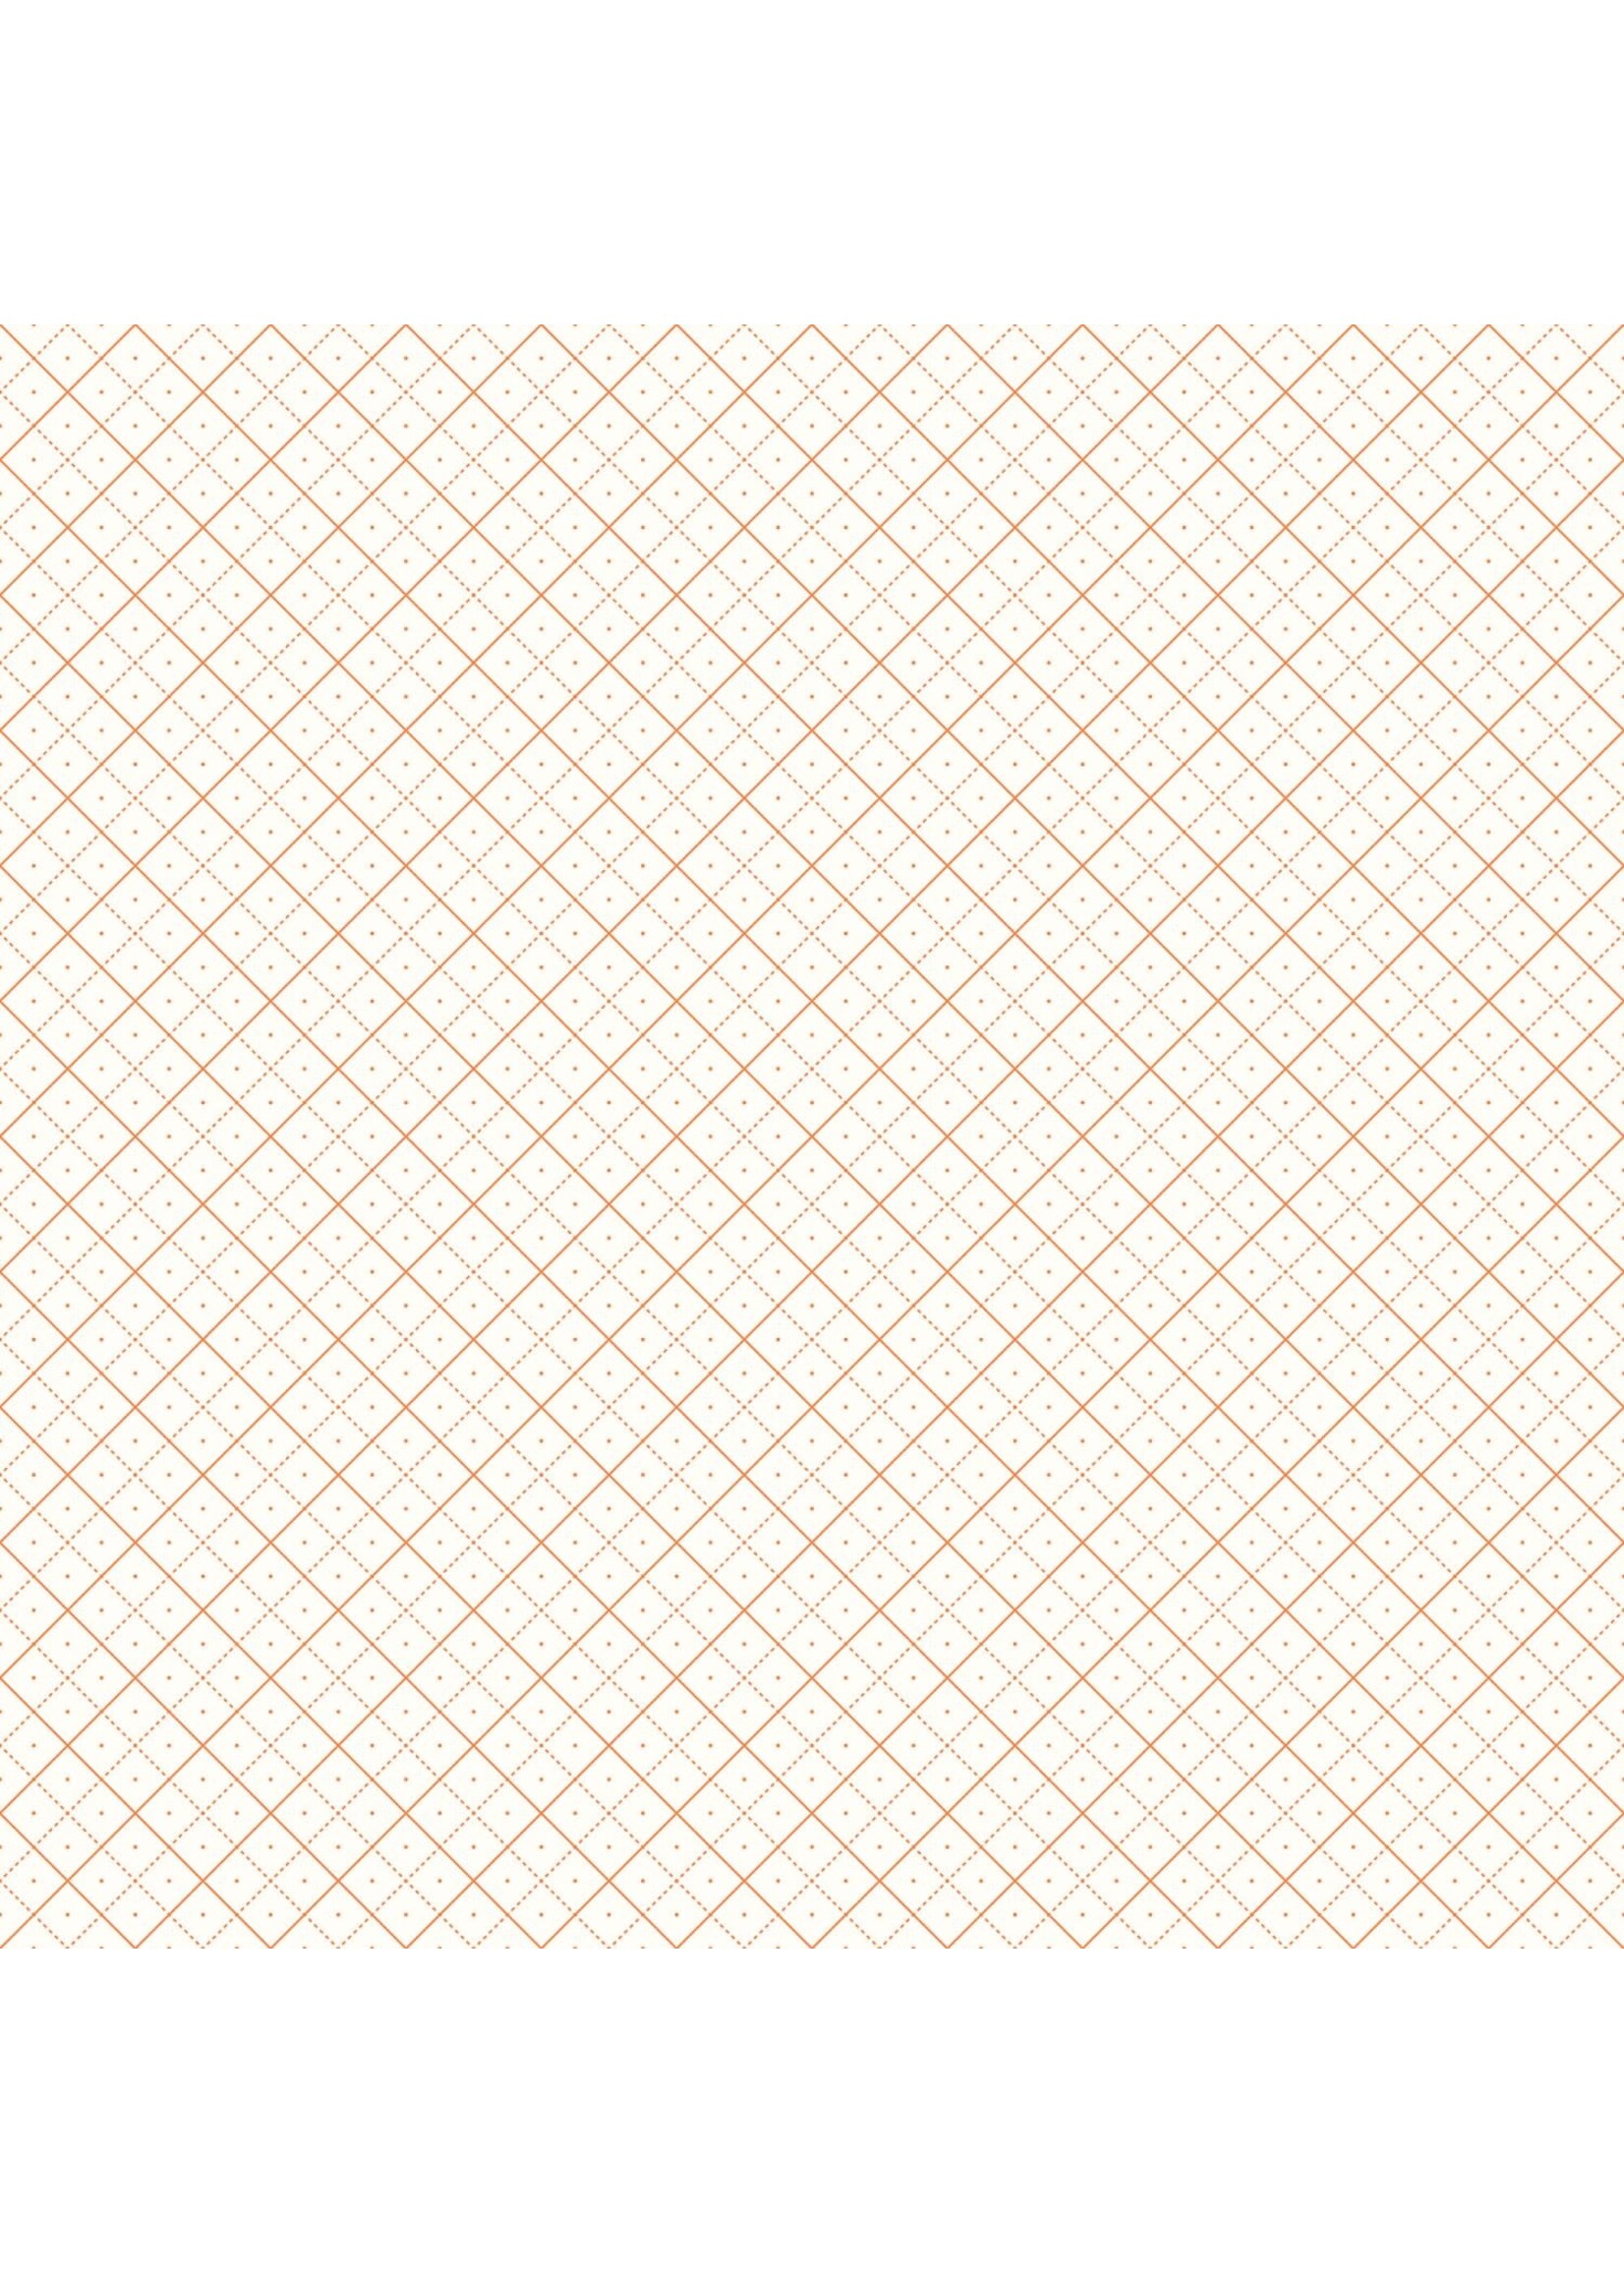 Riley Blake Designs Lori Holt - Bee Backgrounds - Grid - Orange - C7362